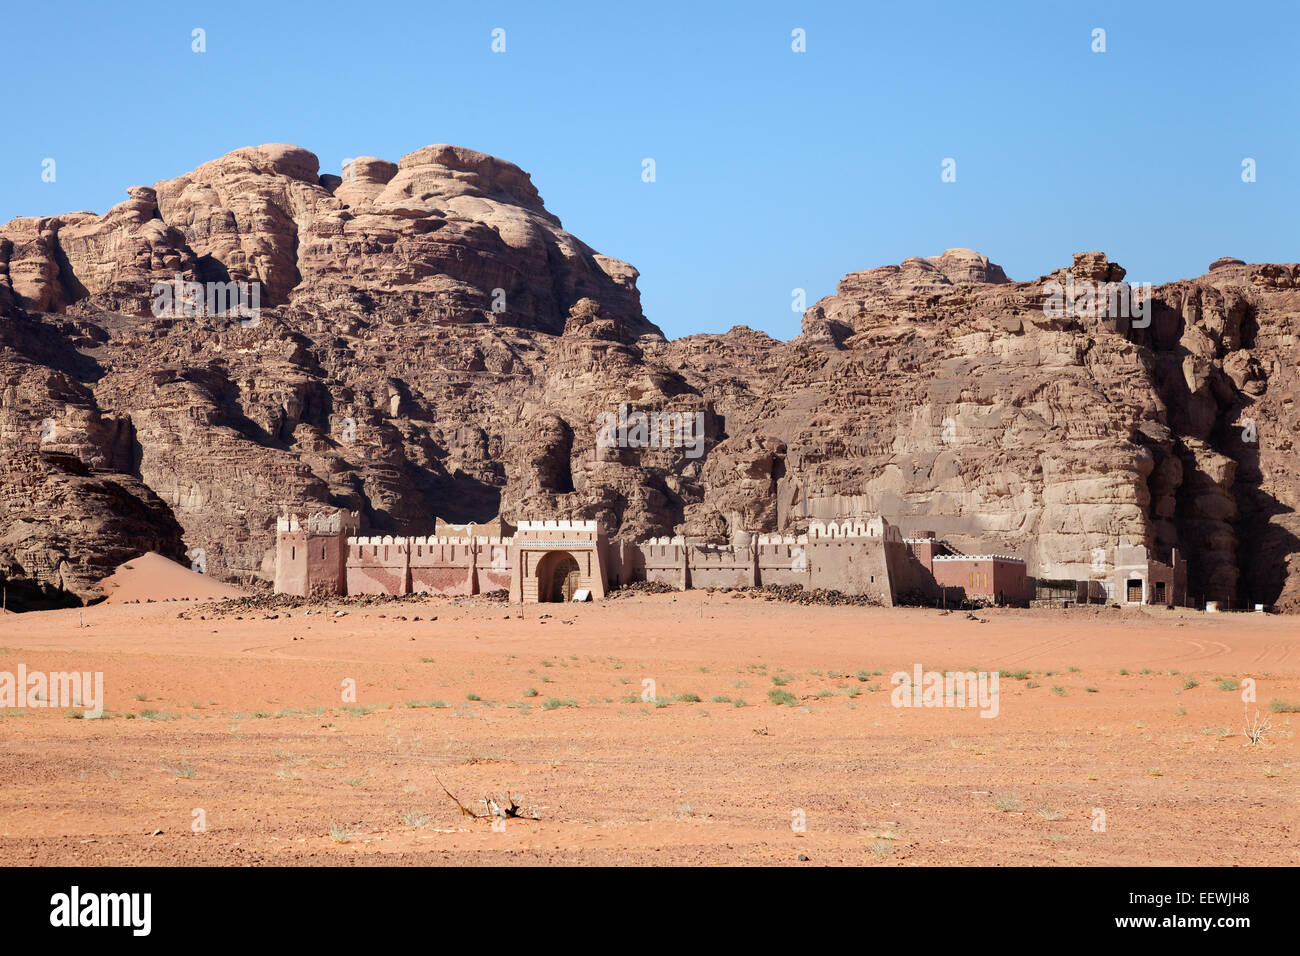 French fortress, sandstone cliffs, desert, Wadi Rum, Jordan Stock Photo